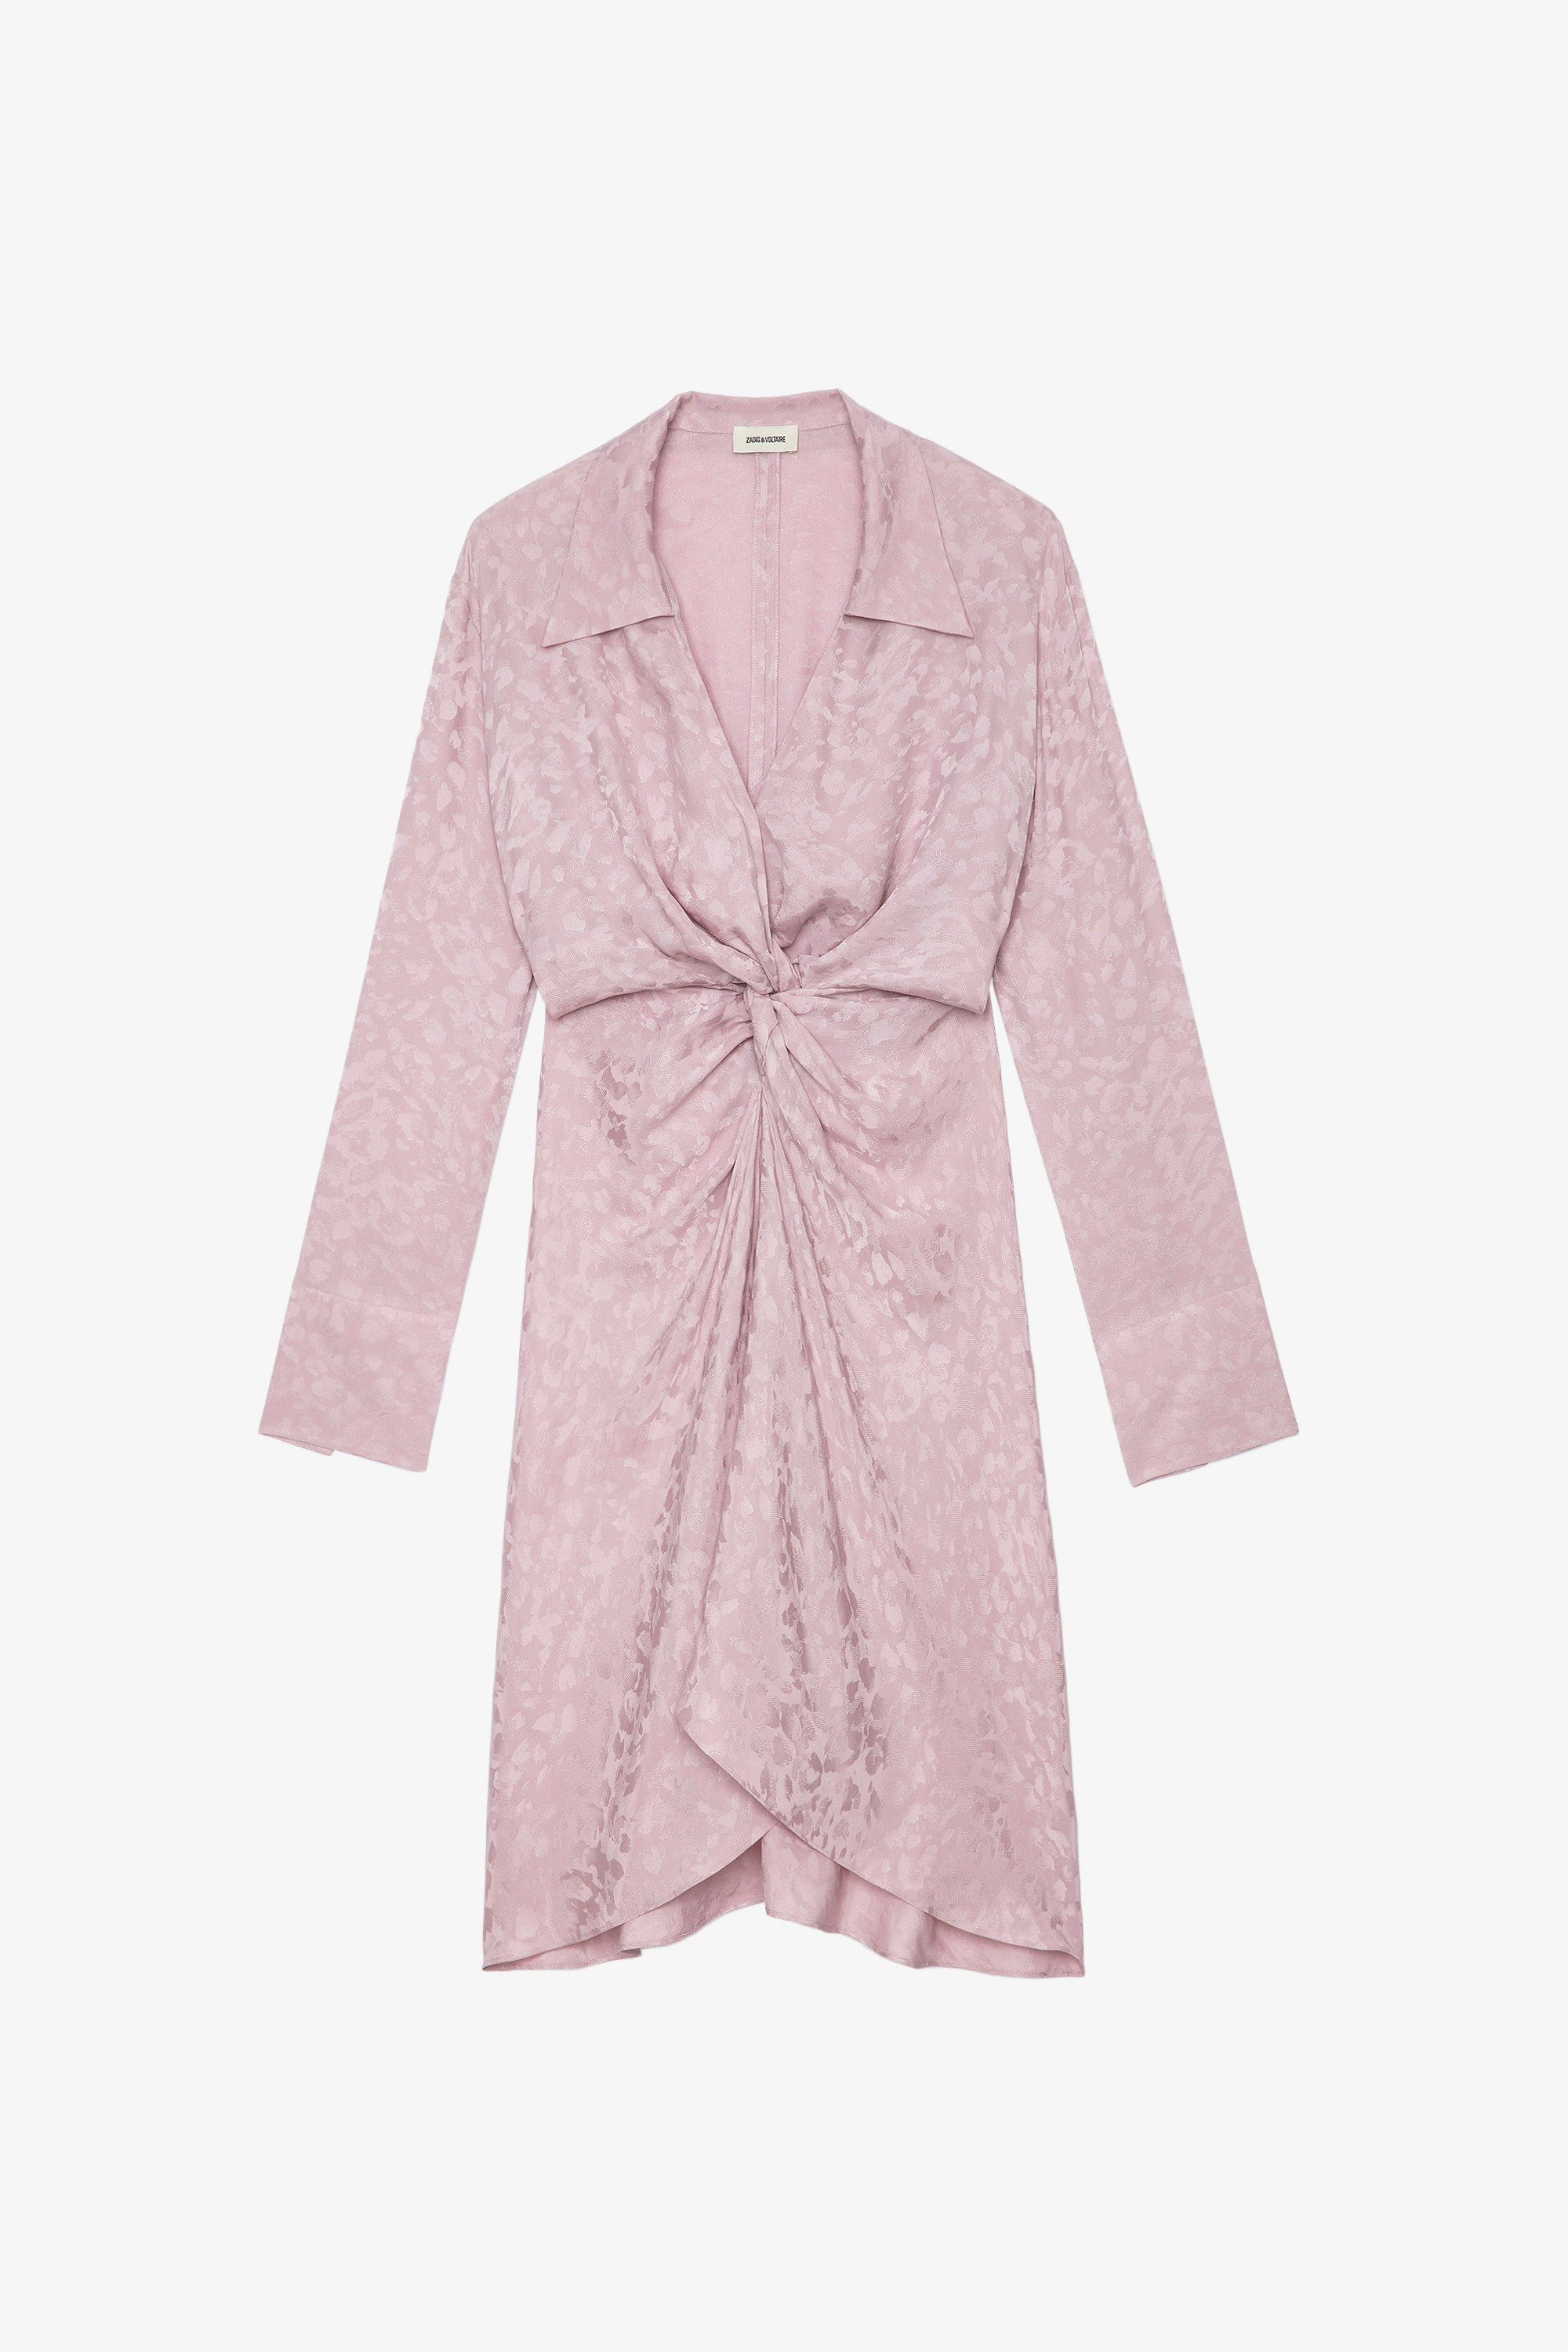 Rozo Silk Dress Women’s long dress in pink leopard-print jacquard silk, draped and tied at the waist